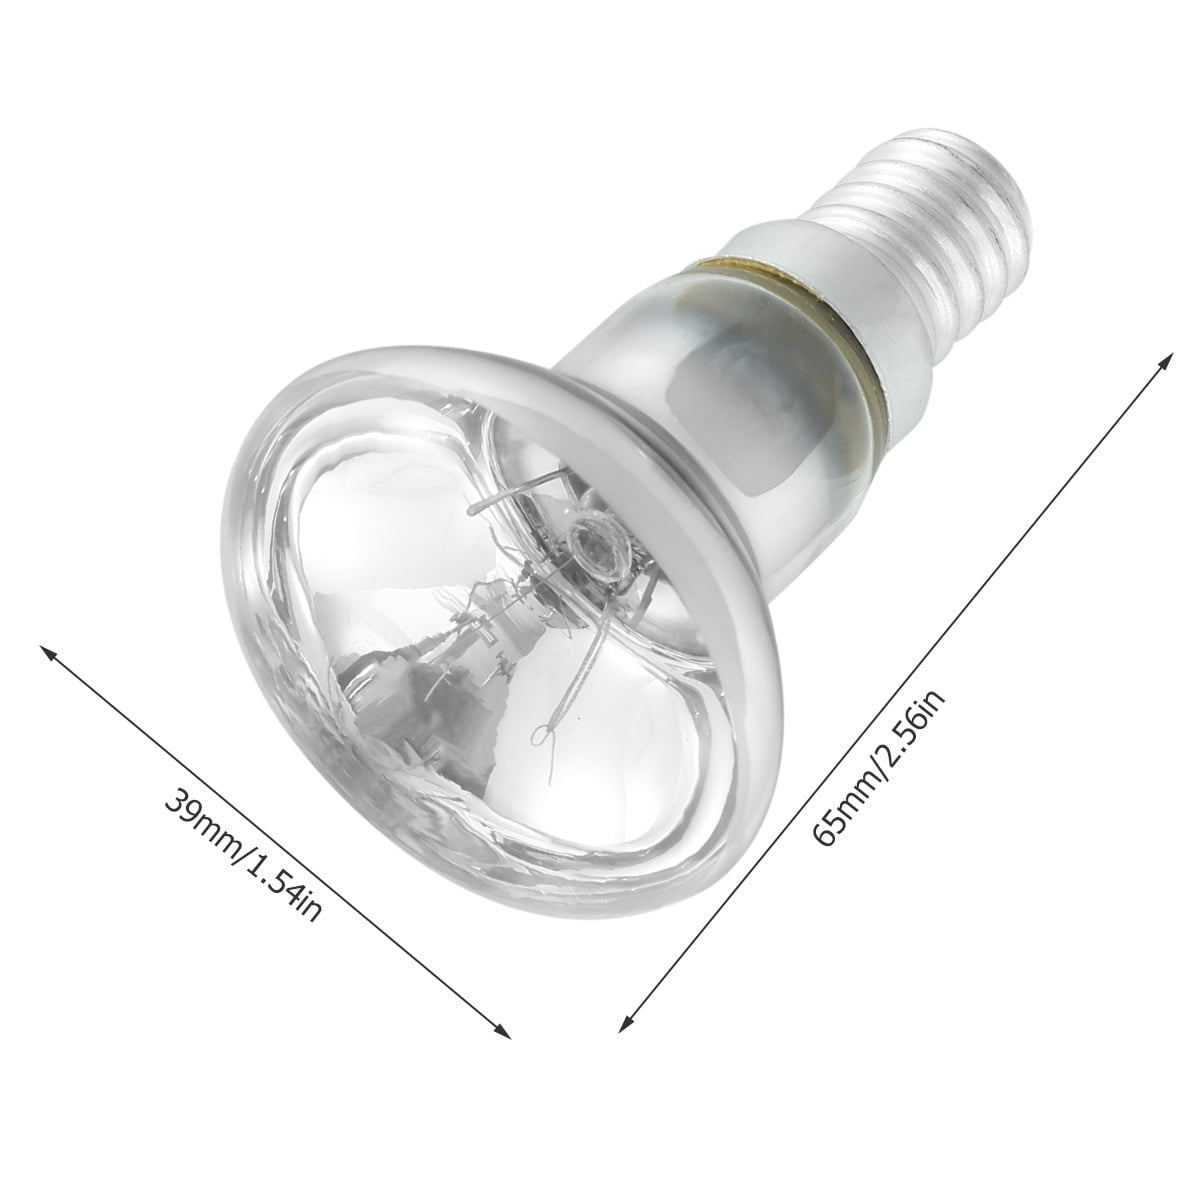 25w E14 Lava Lamp Bulb R39 Reflector Bulb Incandescent Lamp 25w E14 R39 Lava  Lamp Bulb (4pcs) [energy Class A++]